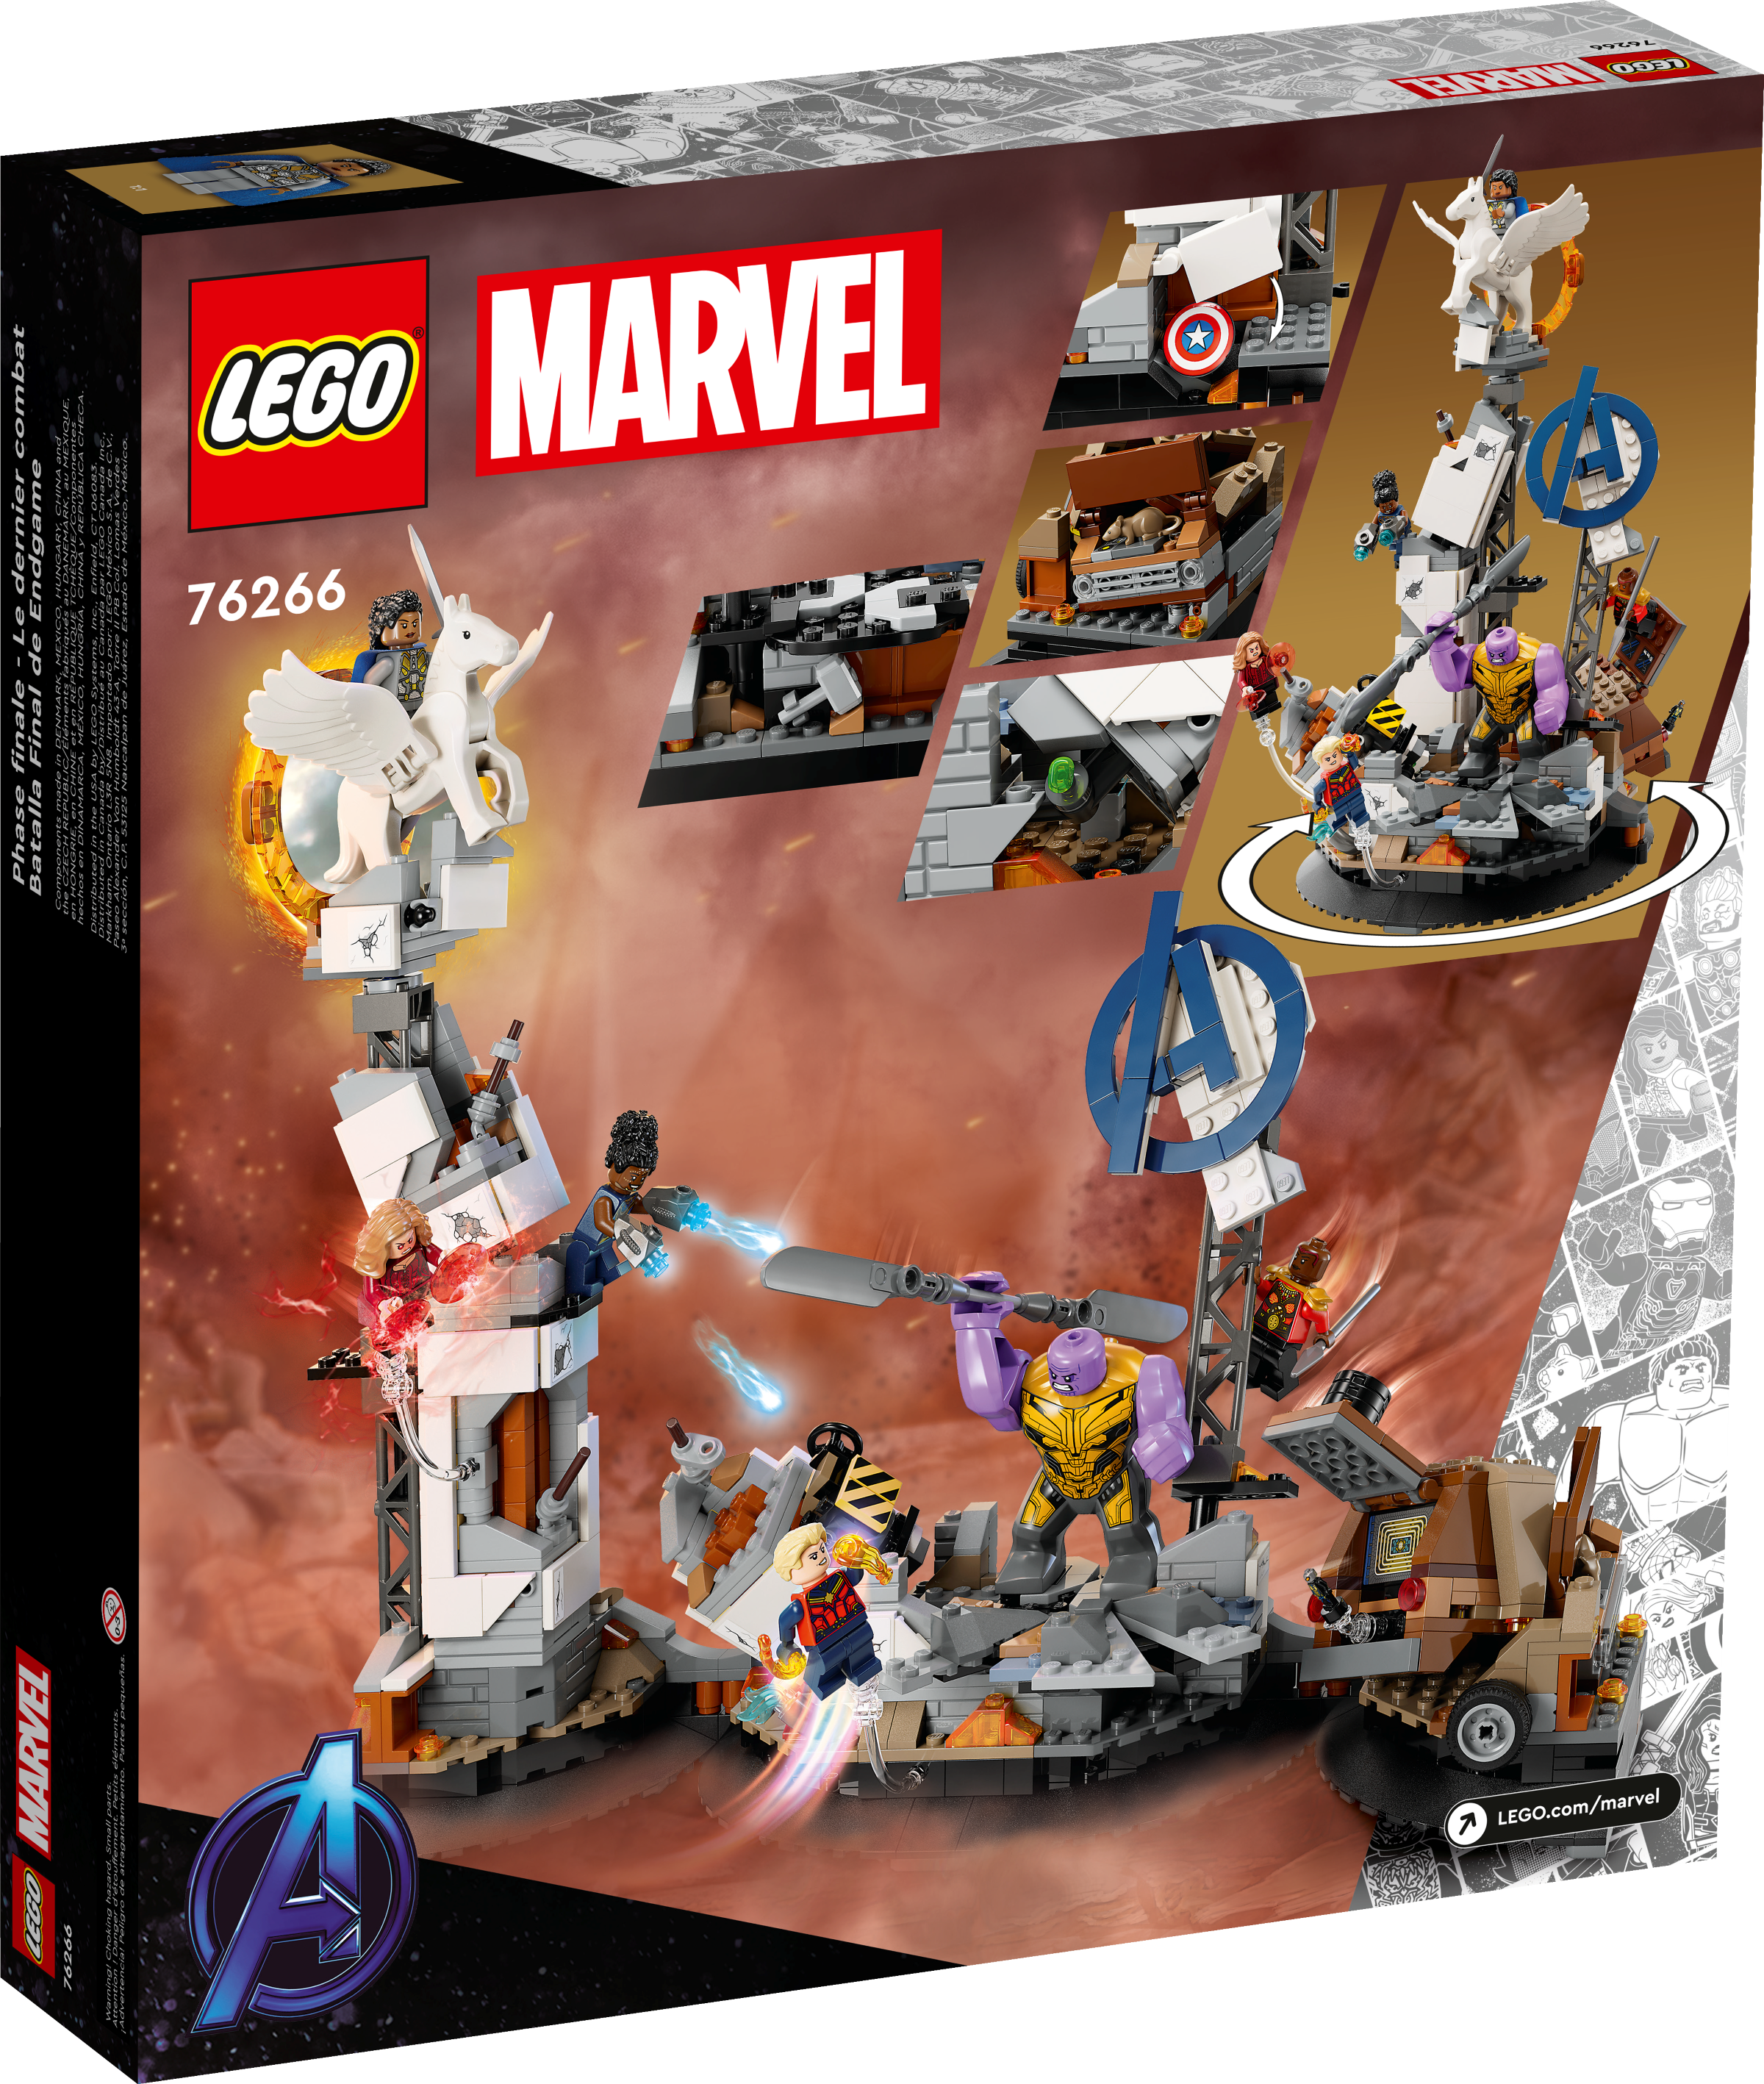 LEGO Marvel Super Heroes Endgame Final Battle 76266 by LEGO Systems Inc